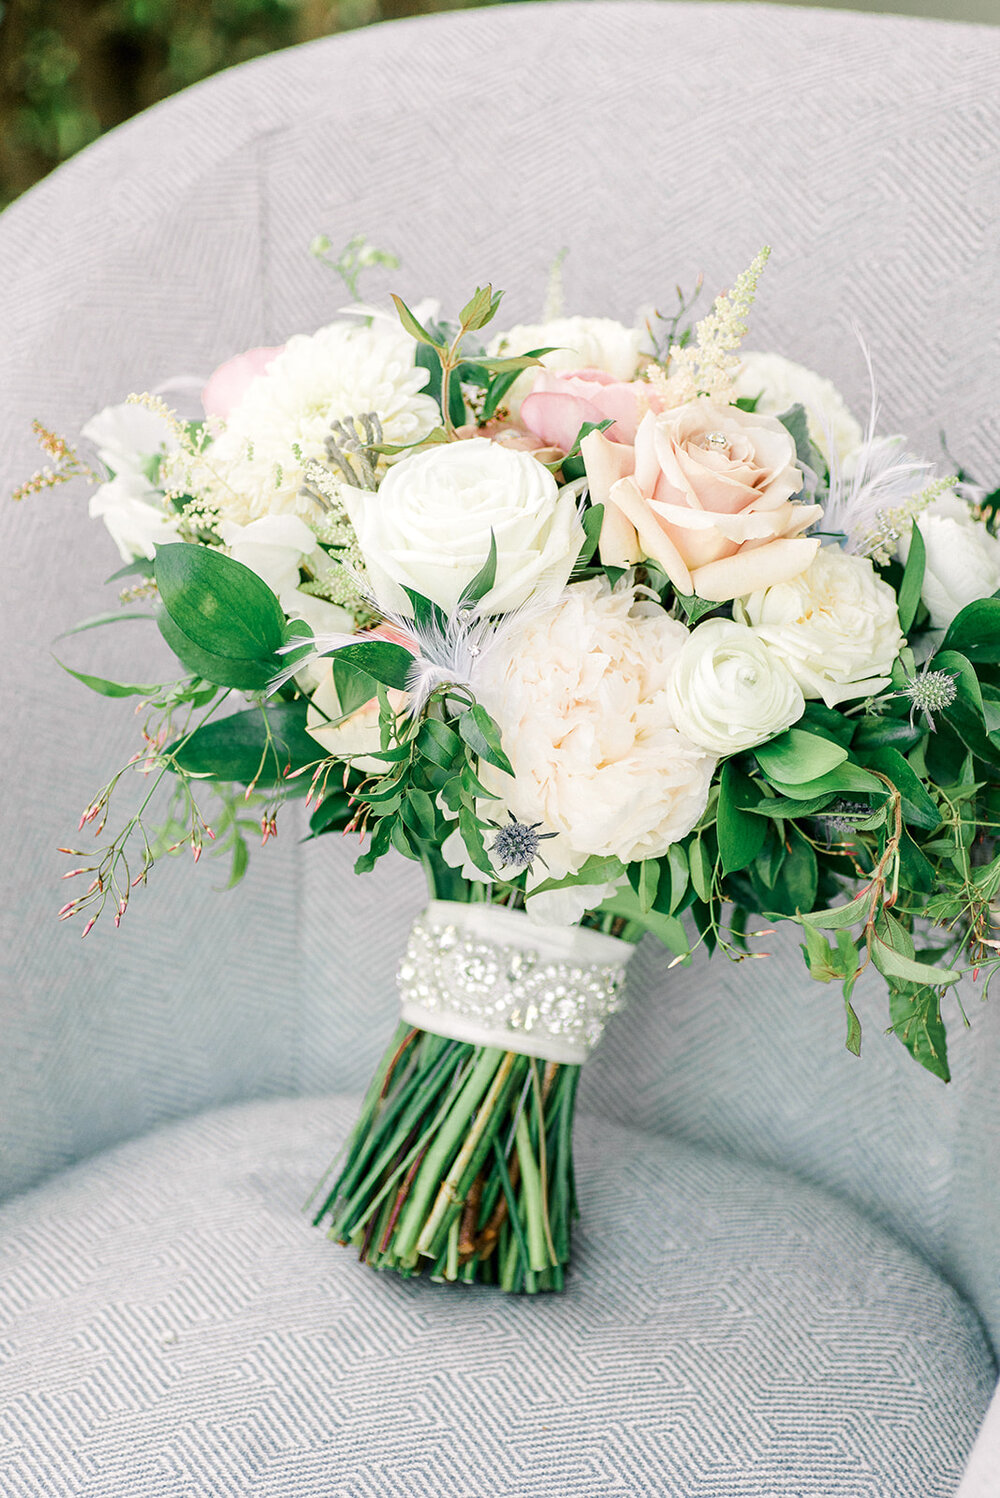 Violette-fleurs-roseville-napa-california-luxury-florist-silverado-resort-and-spa- weddings-by-scott-and-dana-blush-bridal-bouquet-roses-spray-roses-ranunculus.jpg